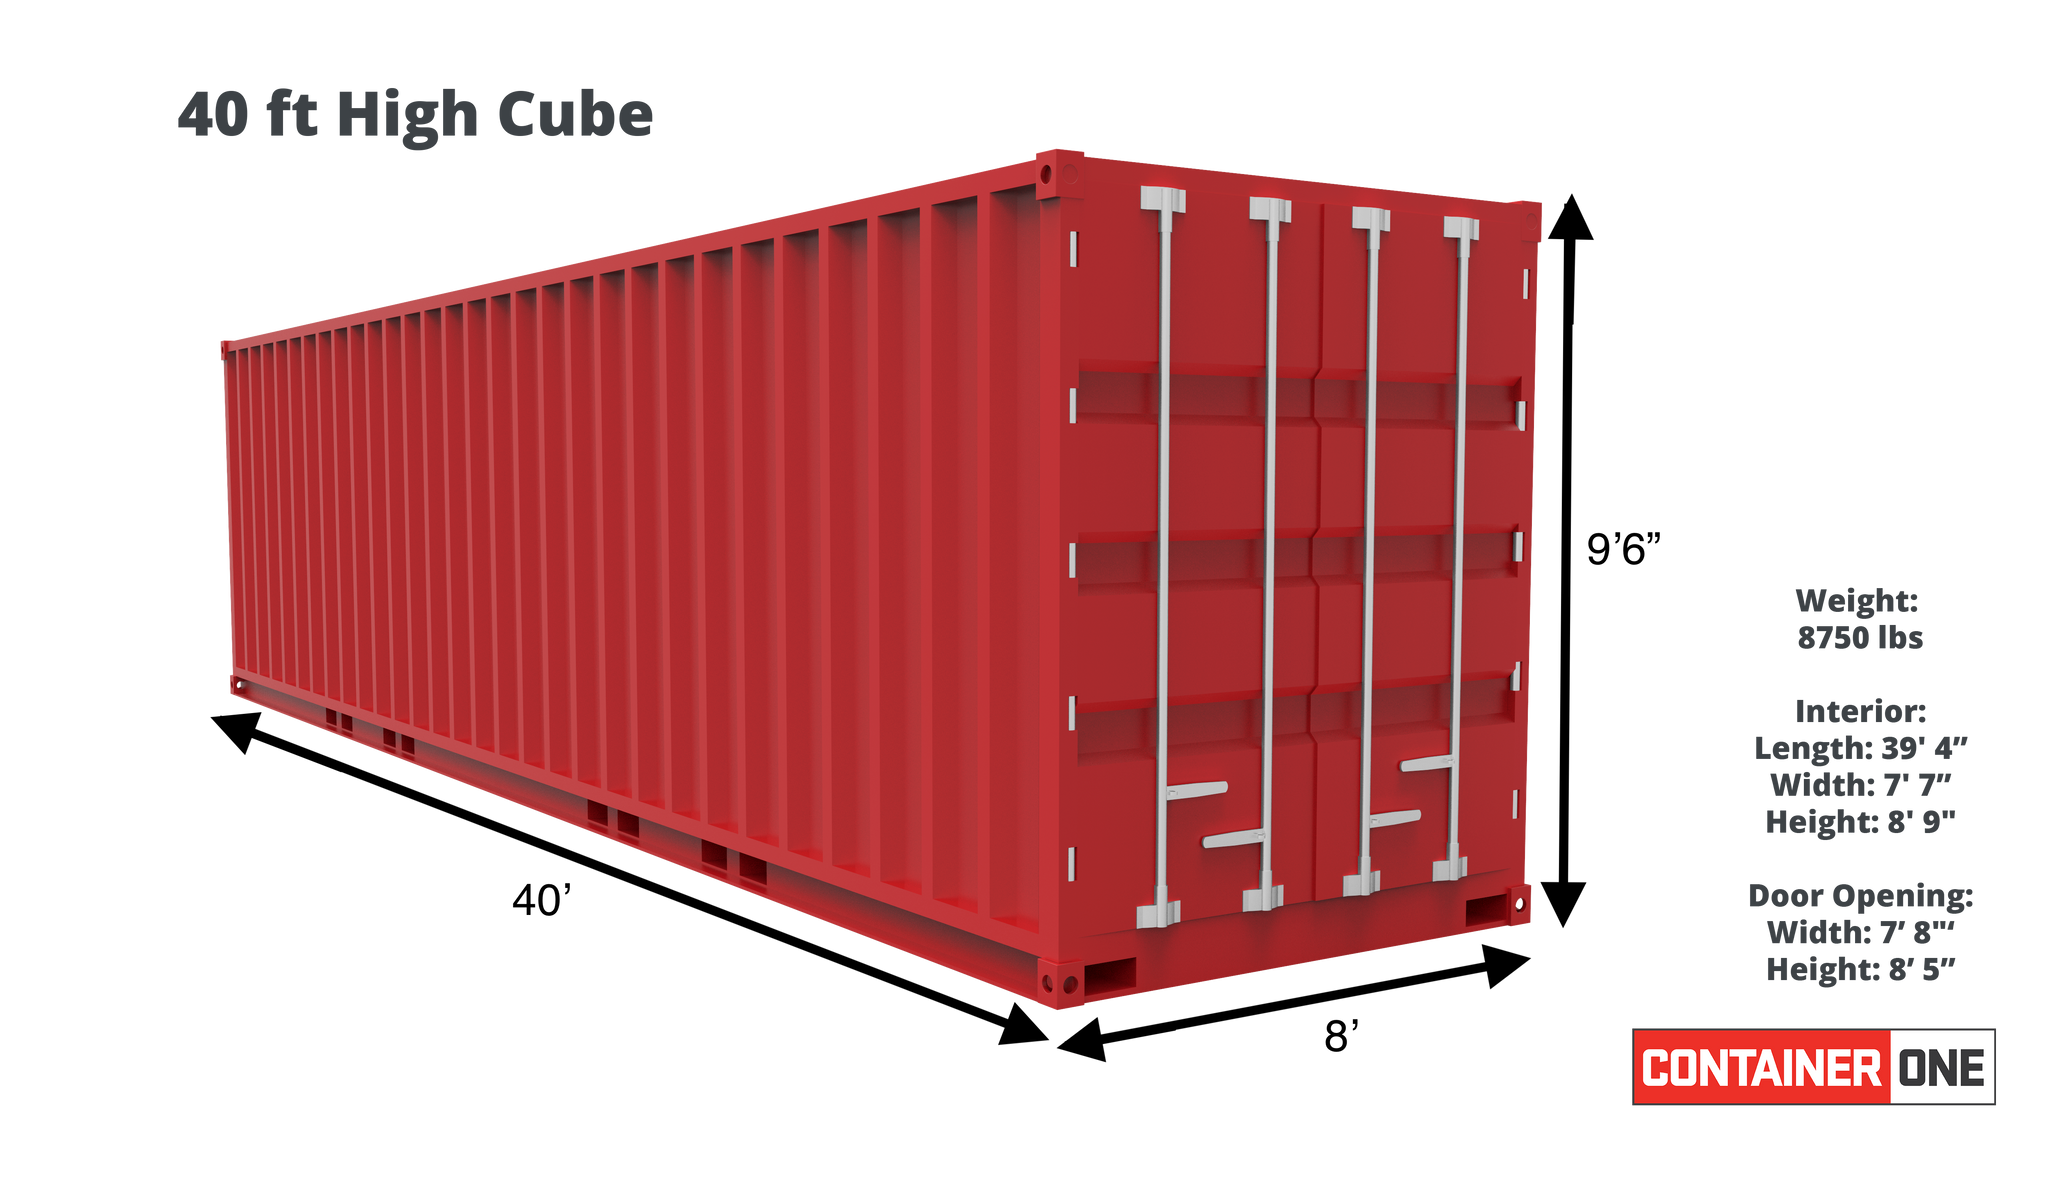 Container height. Контейнер 40 HC/hq (High Cube). 40 Футовый High Cube контейнер DC ISO. Габариты 20 футового контейнера High Cube. Габариты контейнера 40 футов High Cube.